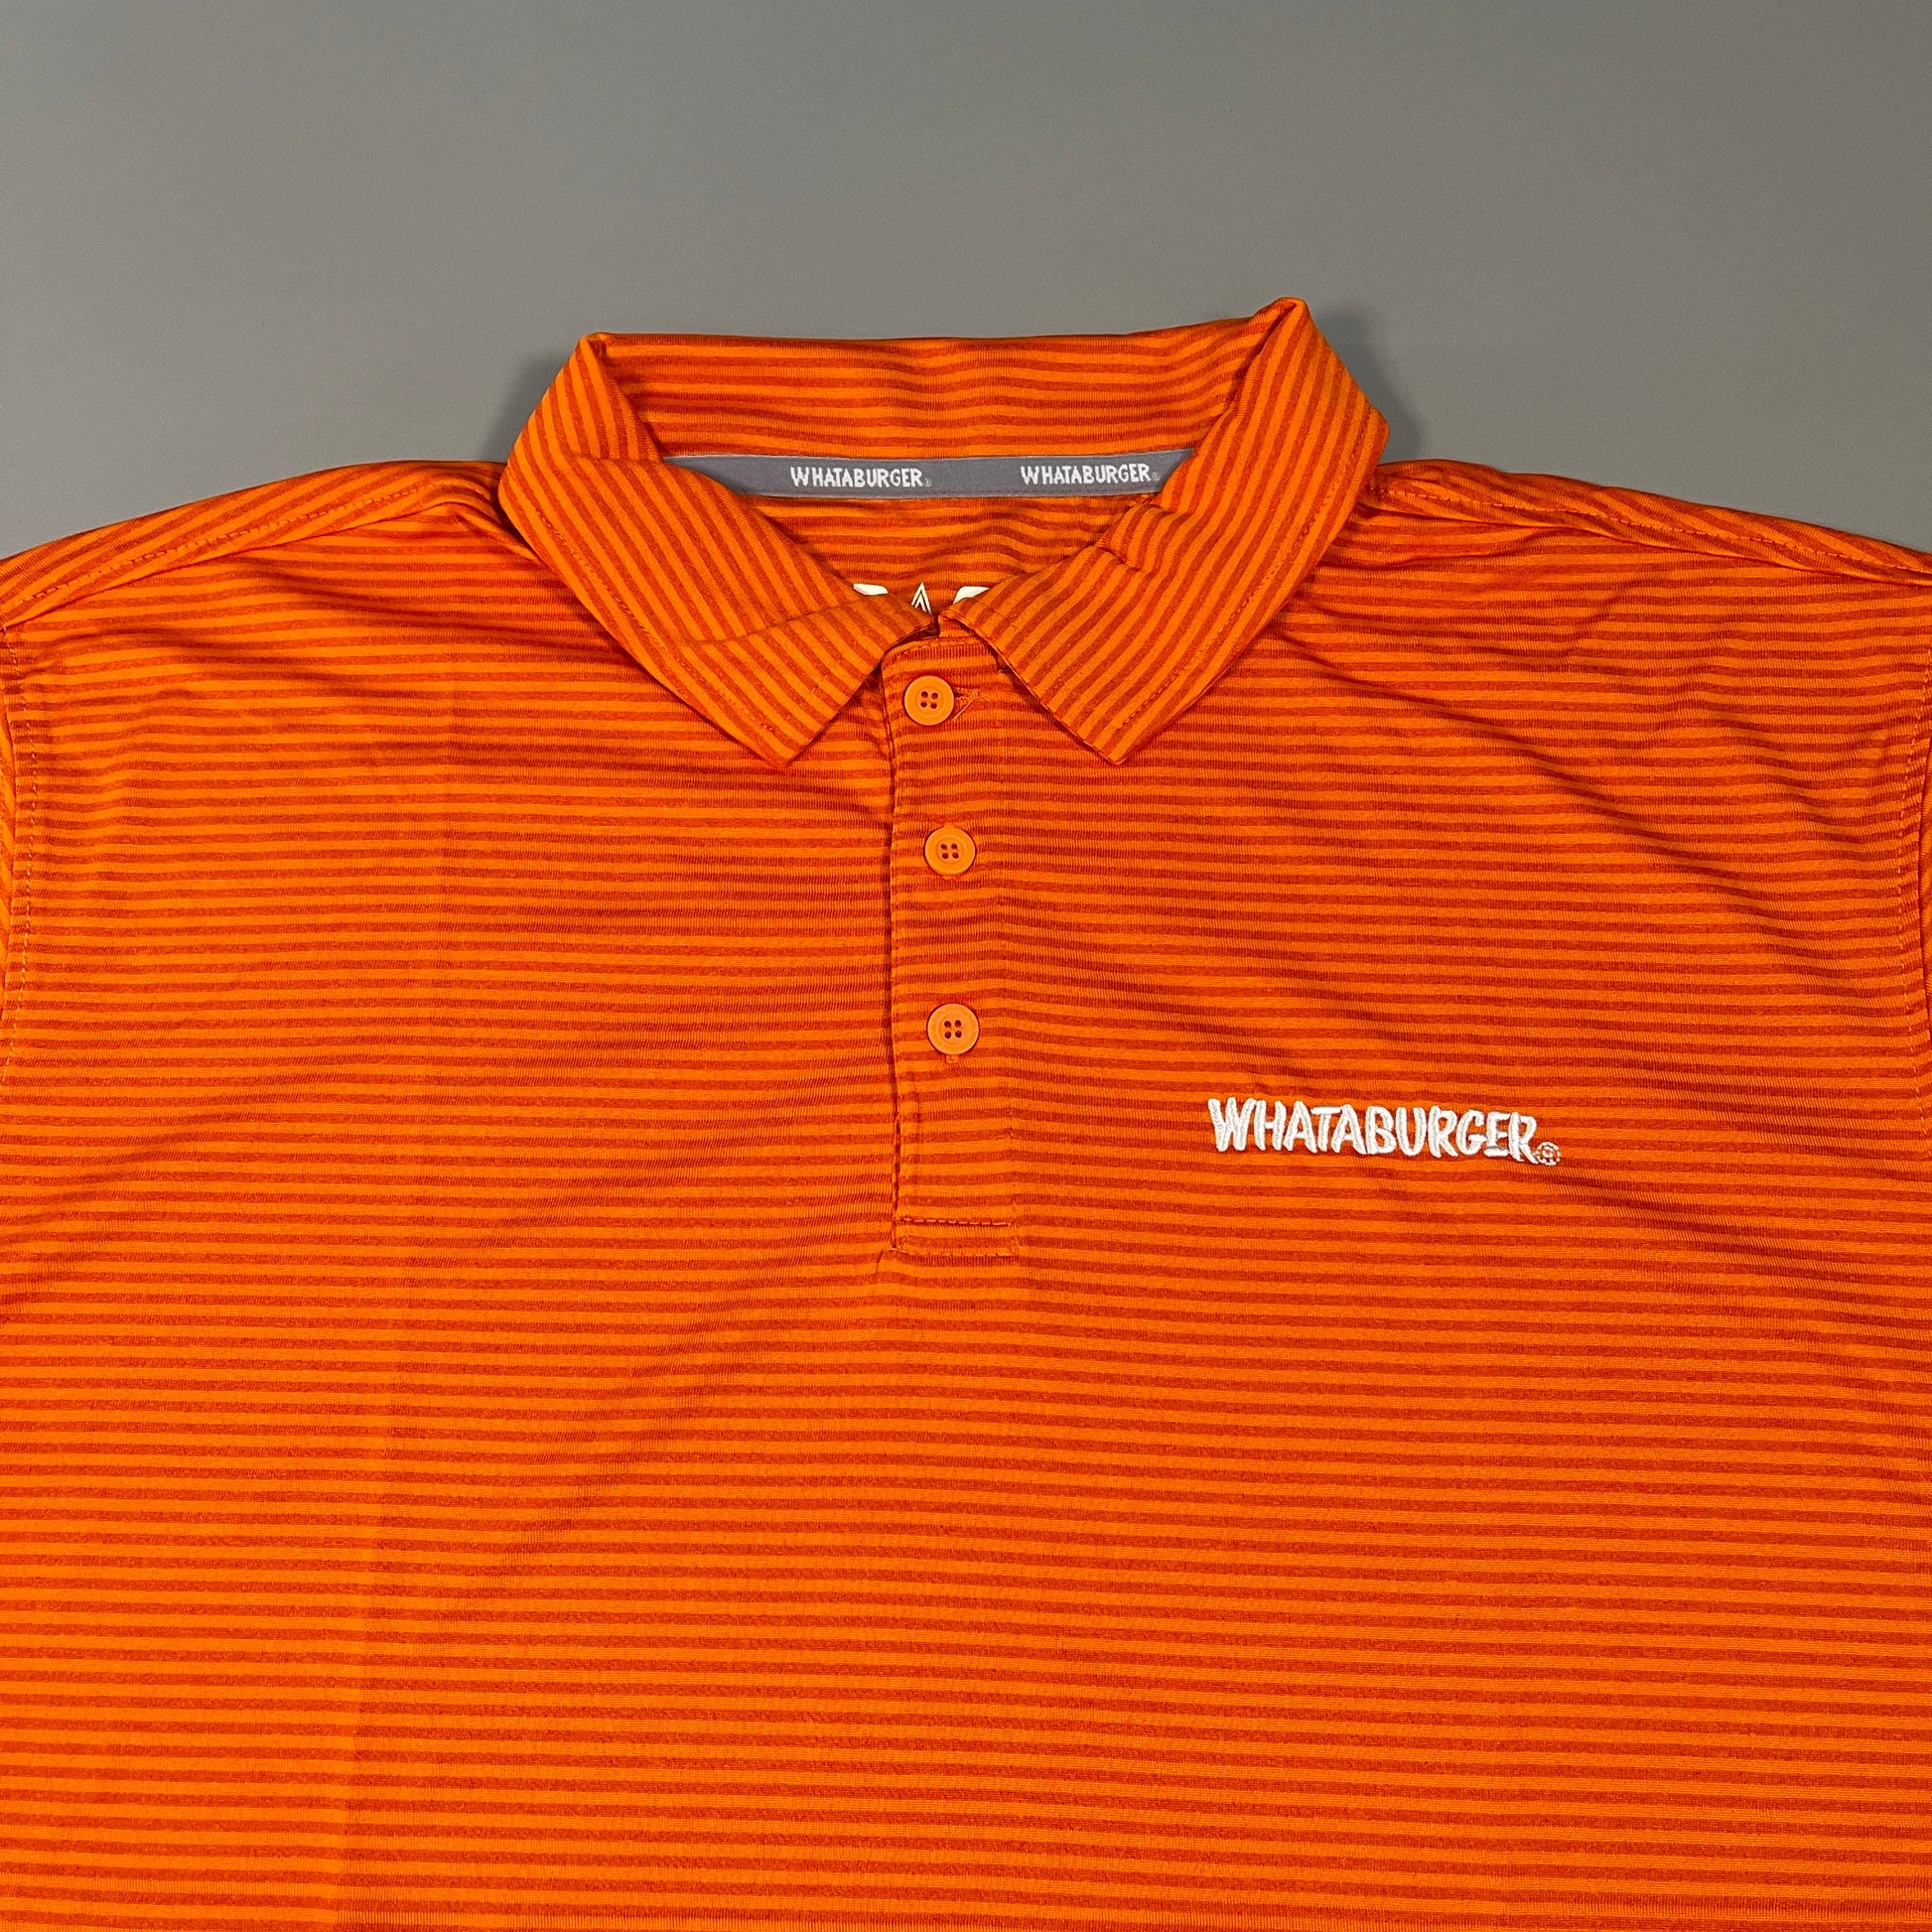 Whataburger Employee Polo Shirt Small Orange Stripes Uniform Fast Food Texas